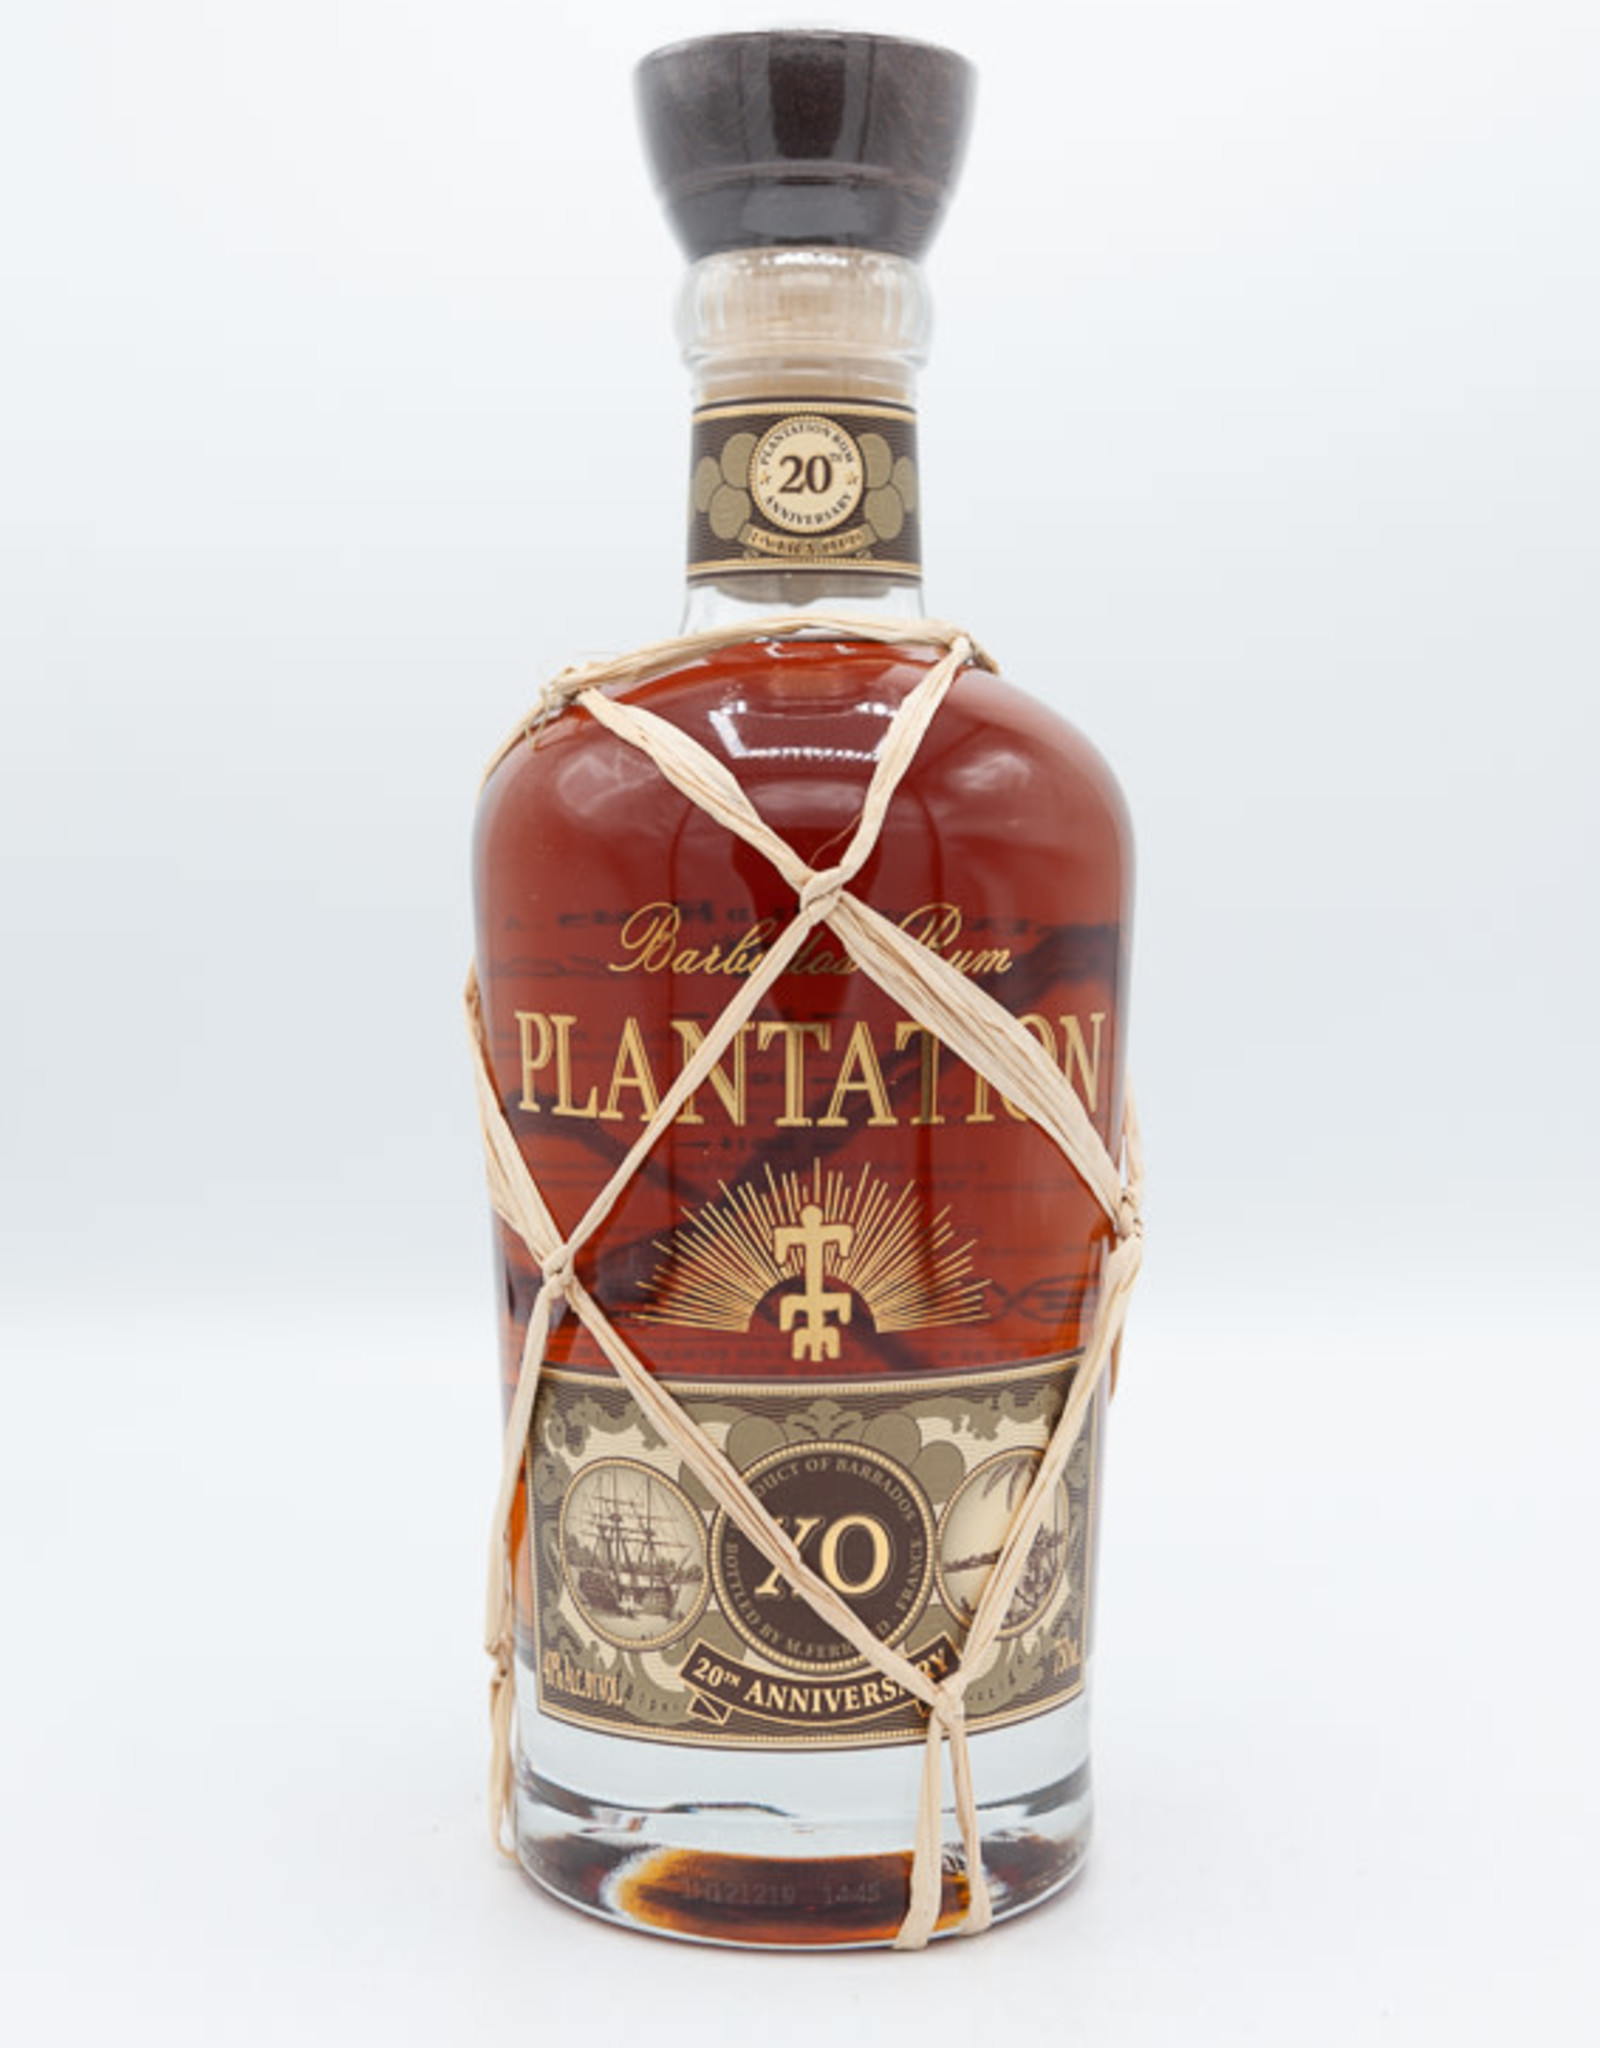 Plantation Plantation XO Rum